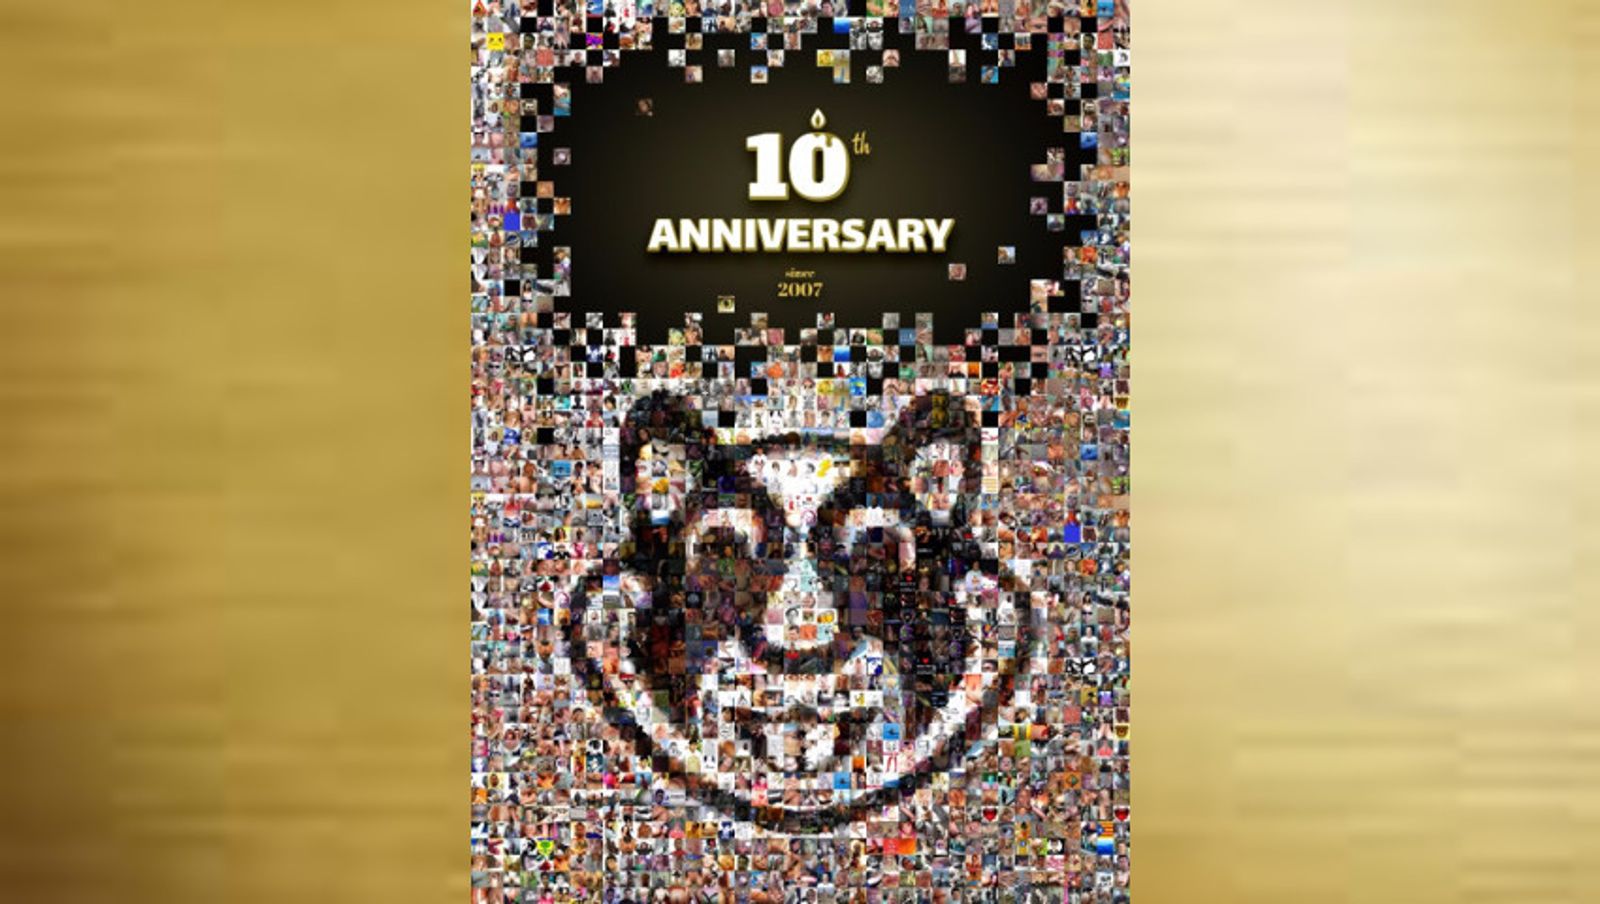 xHamster Celebrates 10 Years